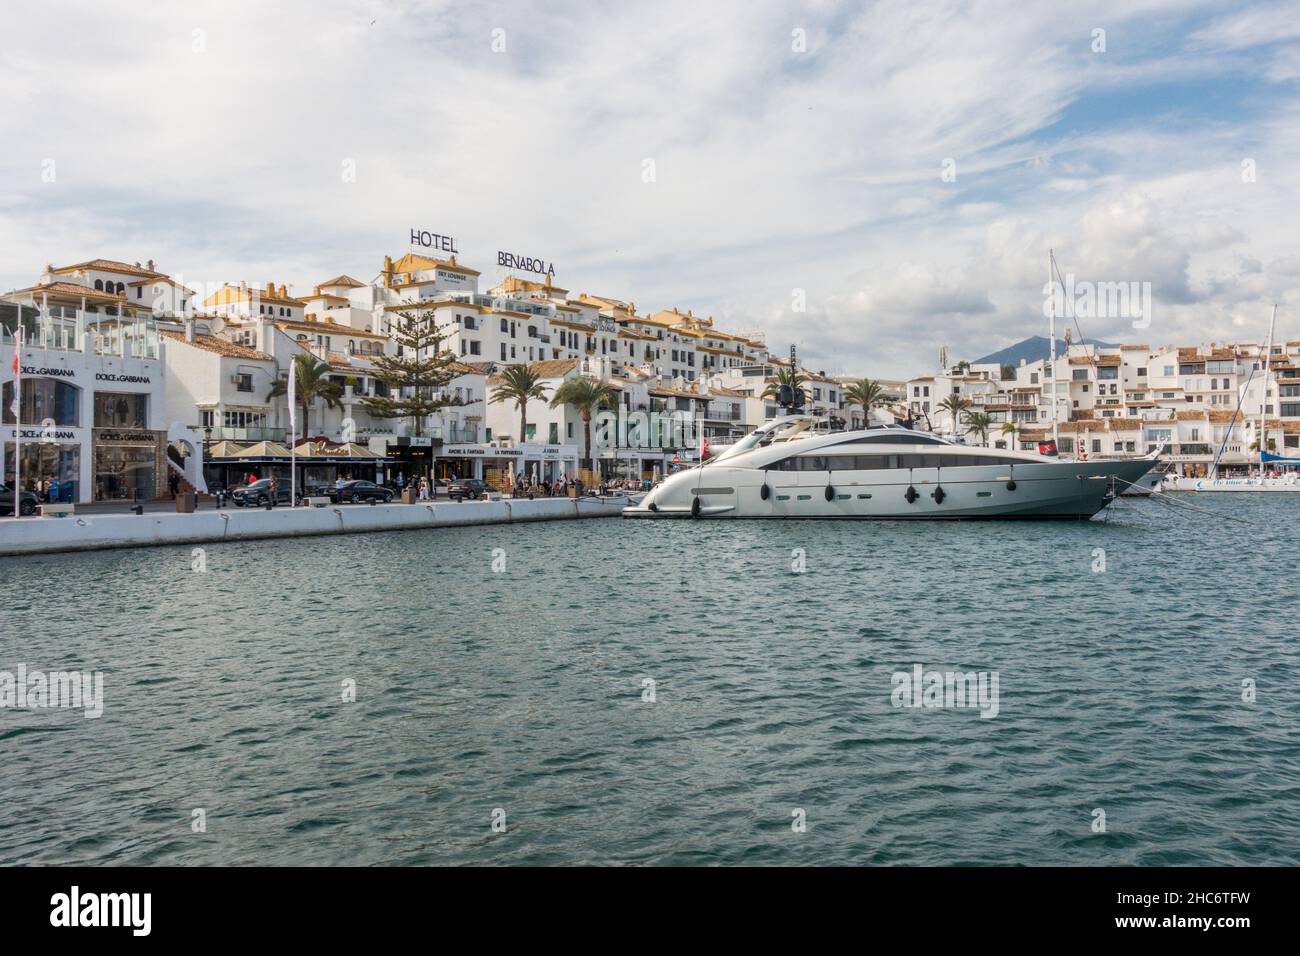 Puerto Banús - Marbella's most glamorous marina